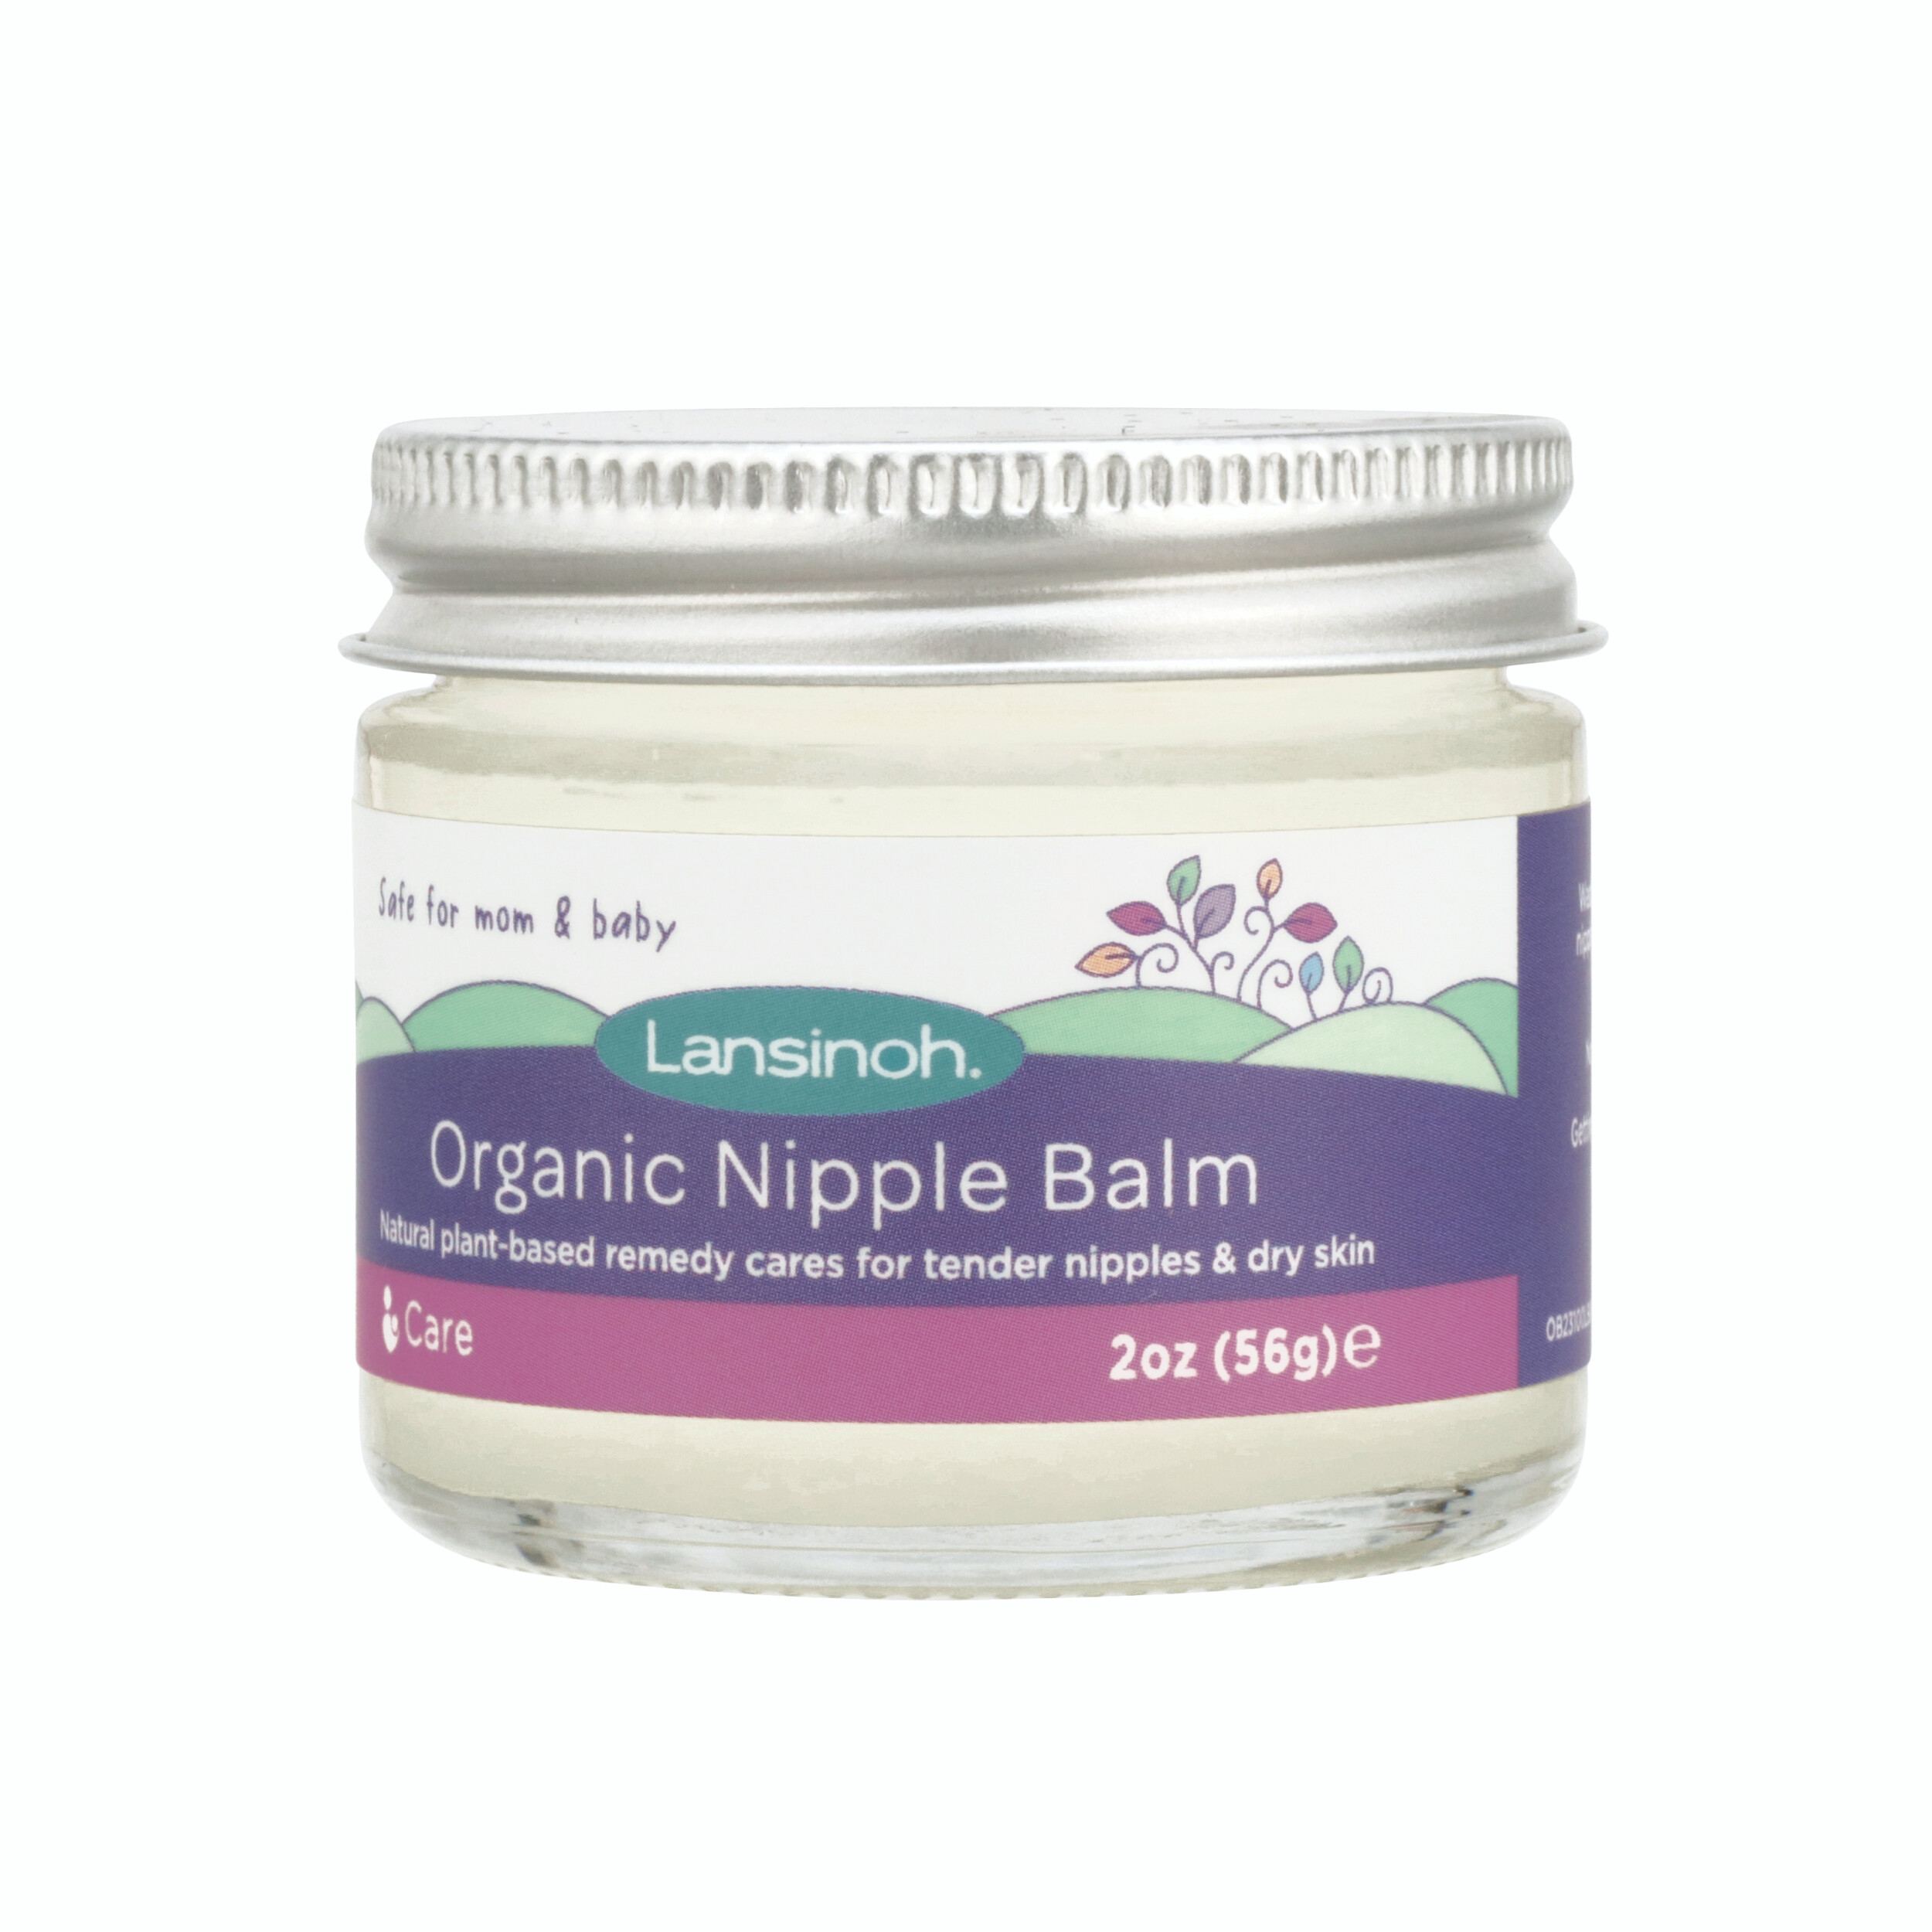 Lansinoh Organic Nipple Balm for Breastfeeding and Dry Skin, 2 oz Jar -  Walmart.com